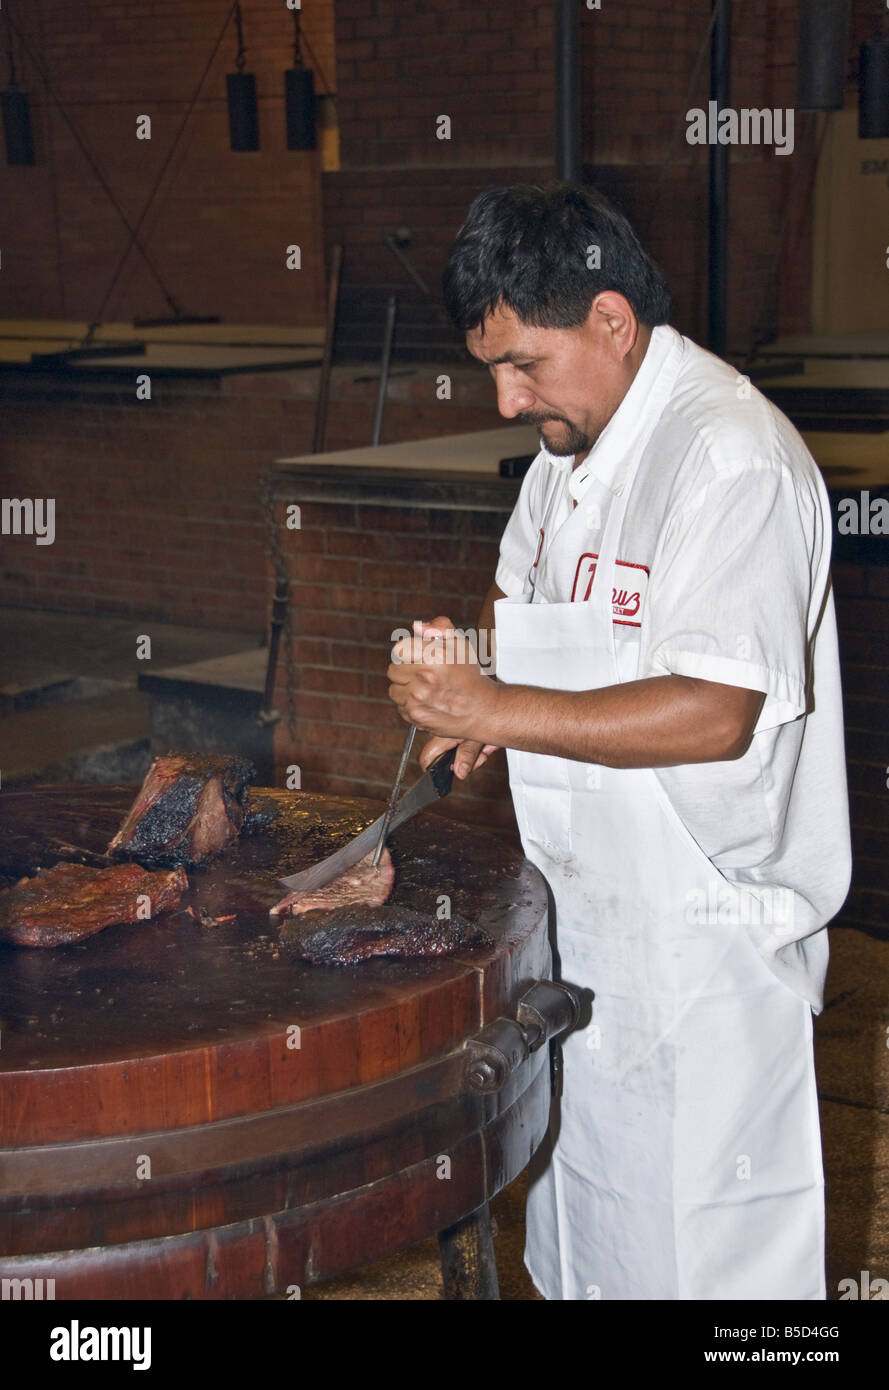 Texas Lockhart Kreuz Market barbecue smoked meat restaurant cutting beef brisket Stock Photo